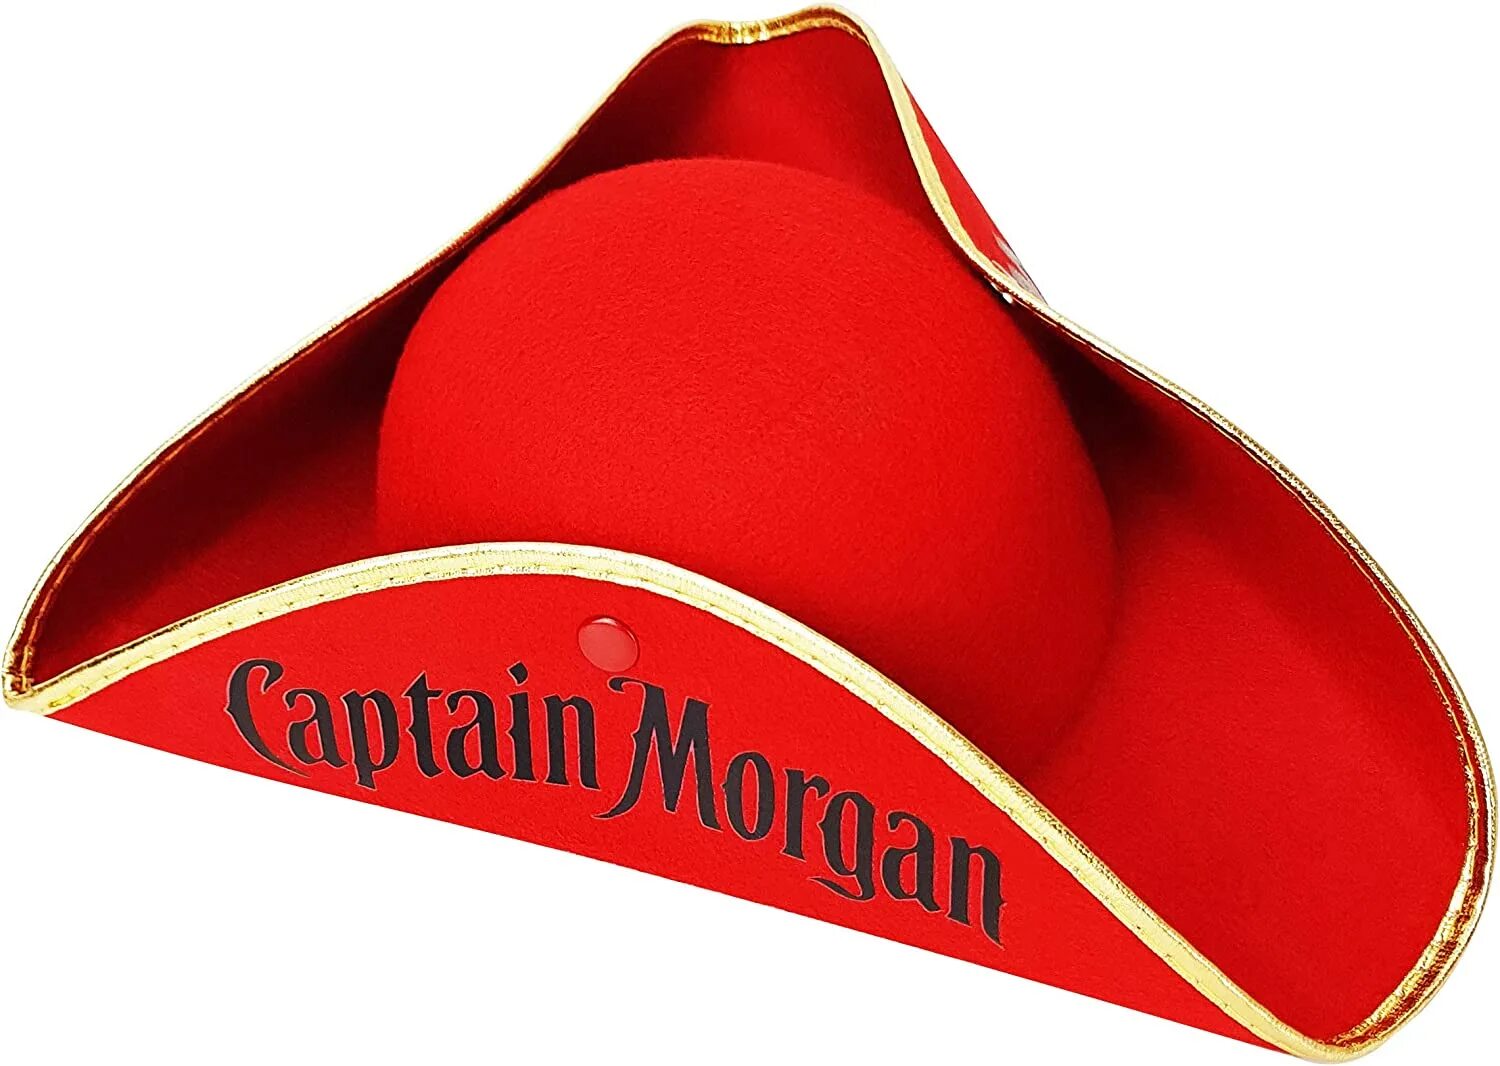 Шляпа Captain Morgan. Пиратская шляпа Captain Morgan. Купить шляпу Капитан Морган. Шляпа Капитан Морган купить Горловка.